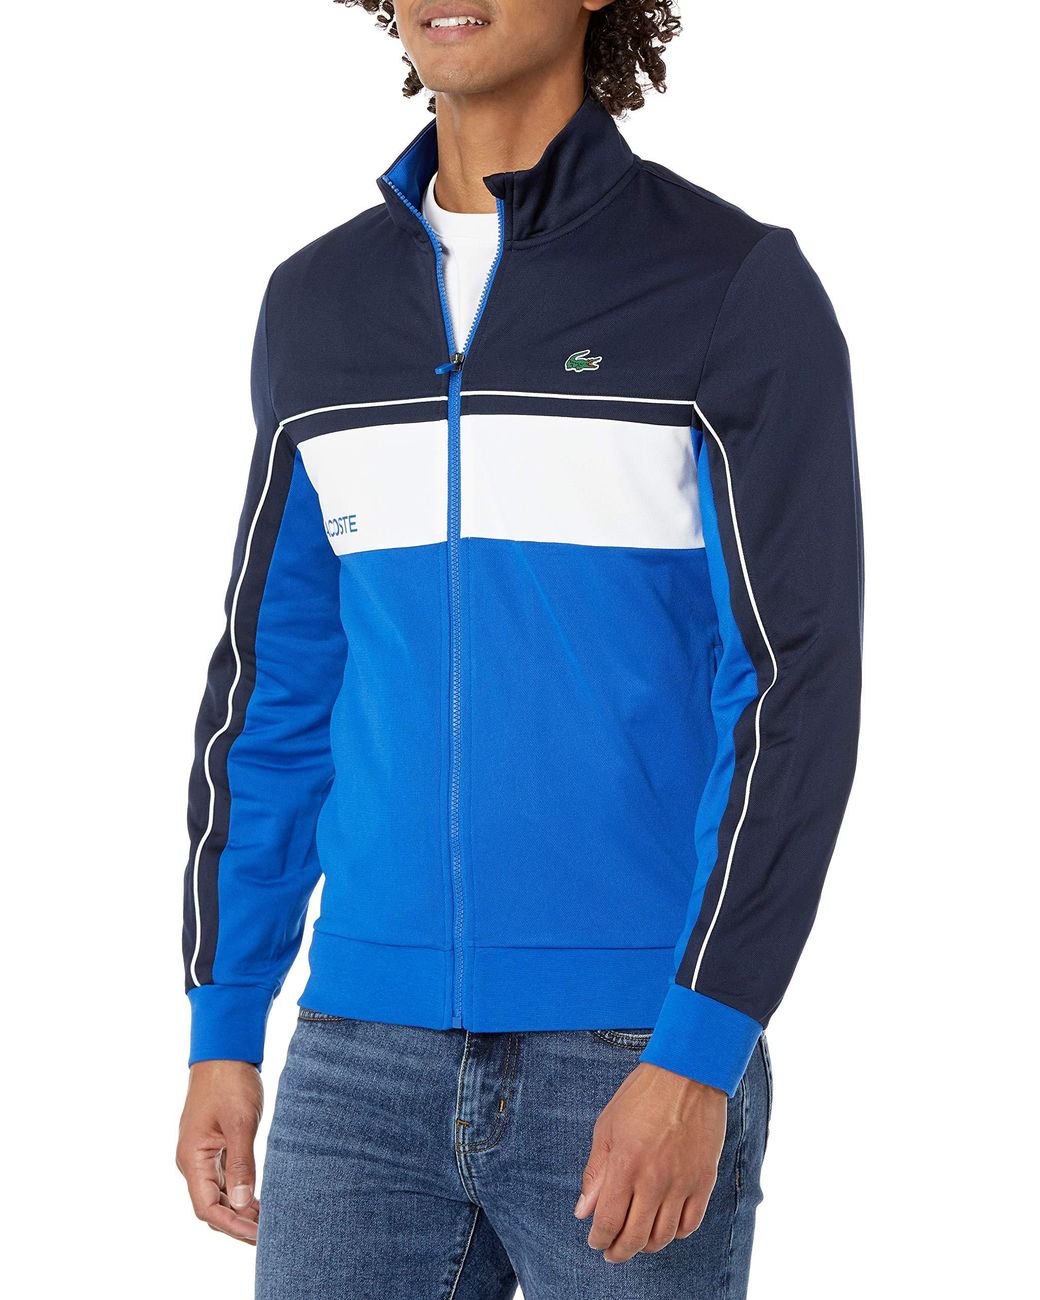 Lacoste Sport Colorblock Tricot Jacket in Blue for Men - Lyst